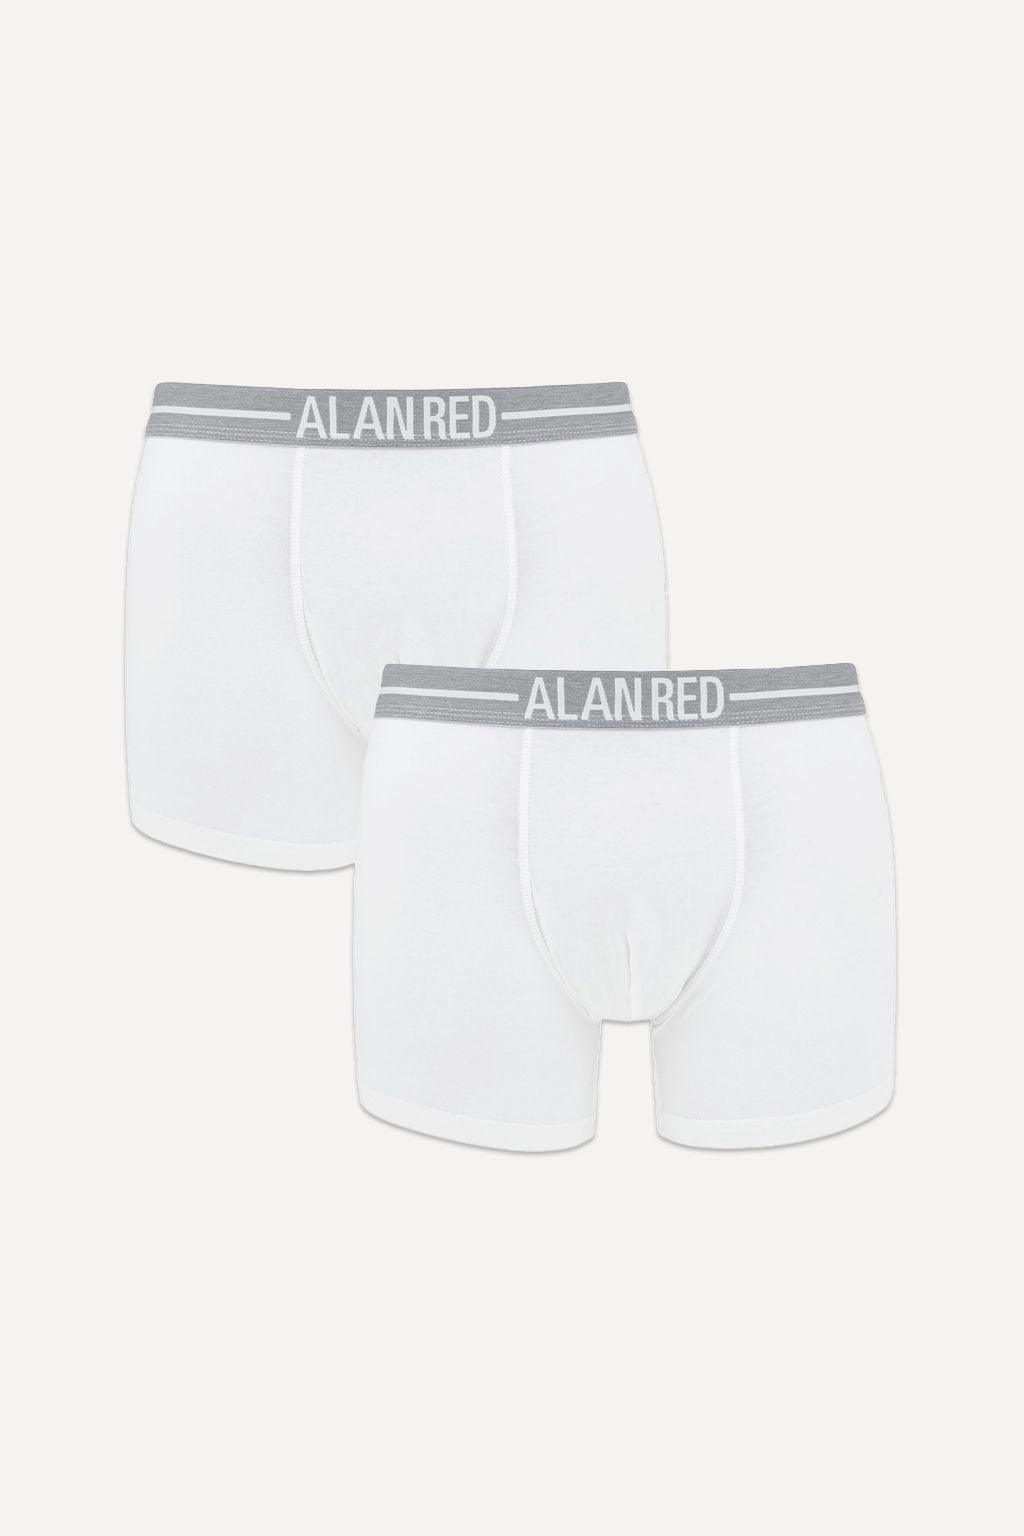 Alan Red underwear | Big Boss | the menswear concept